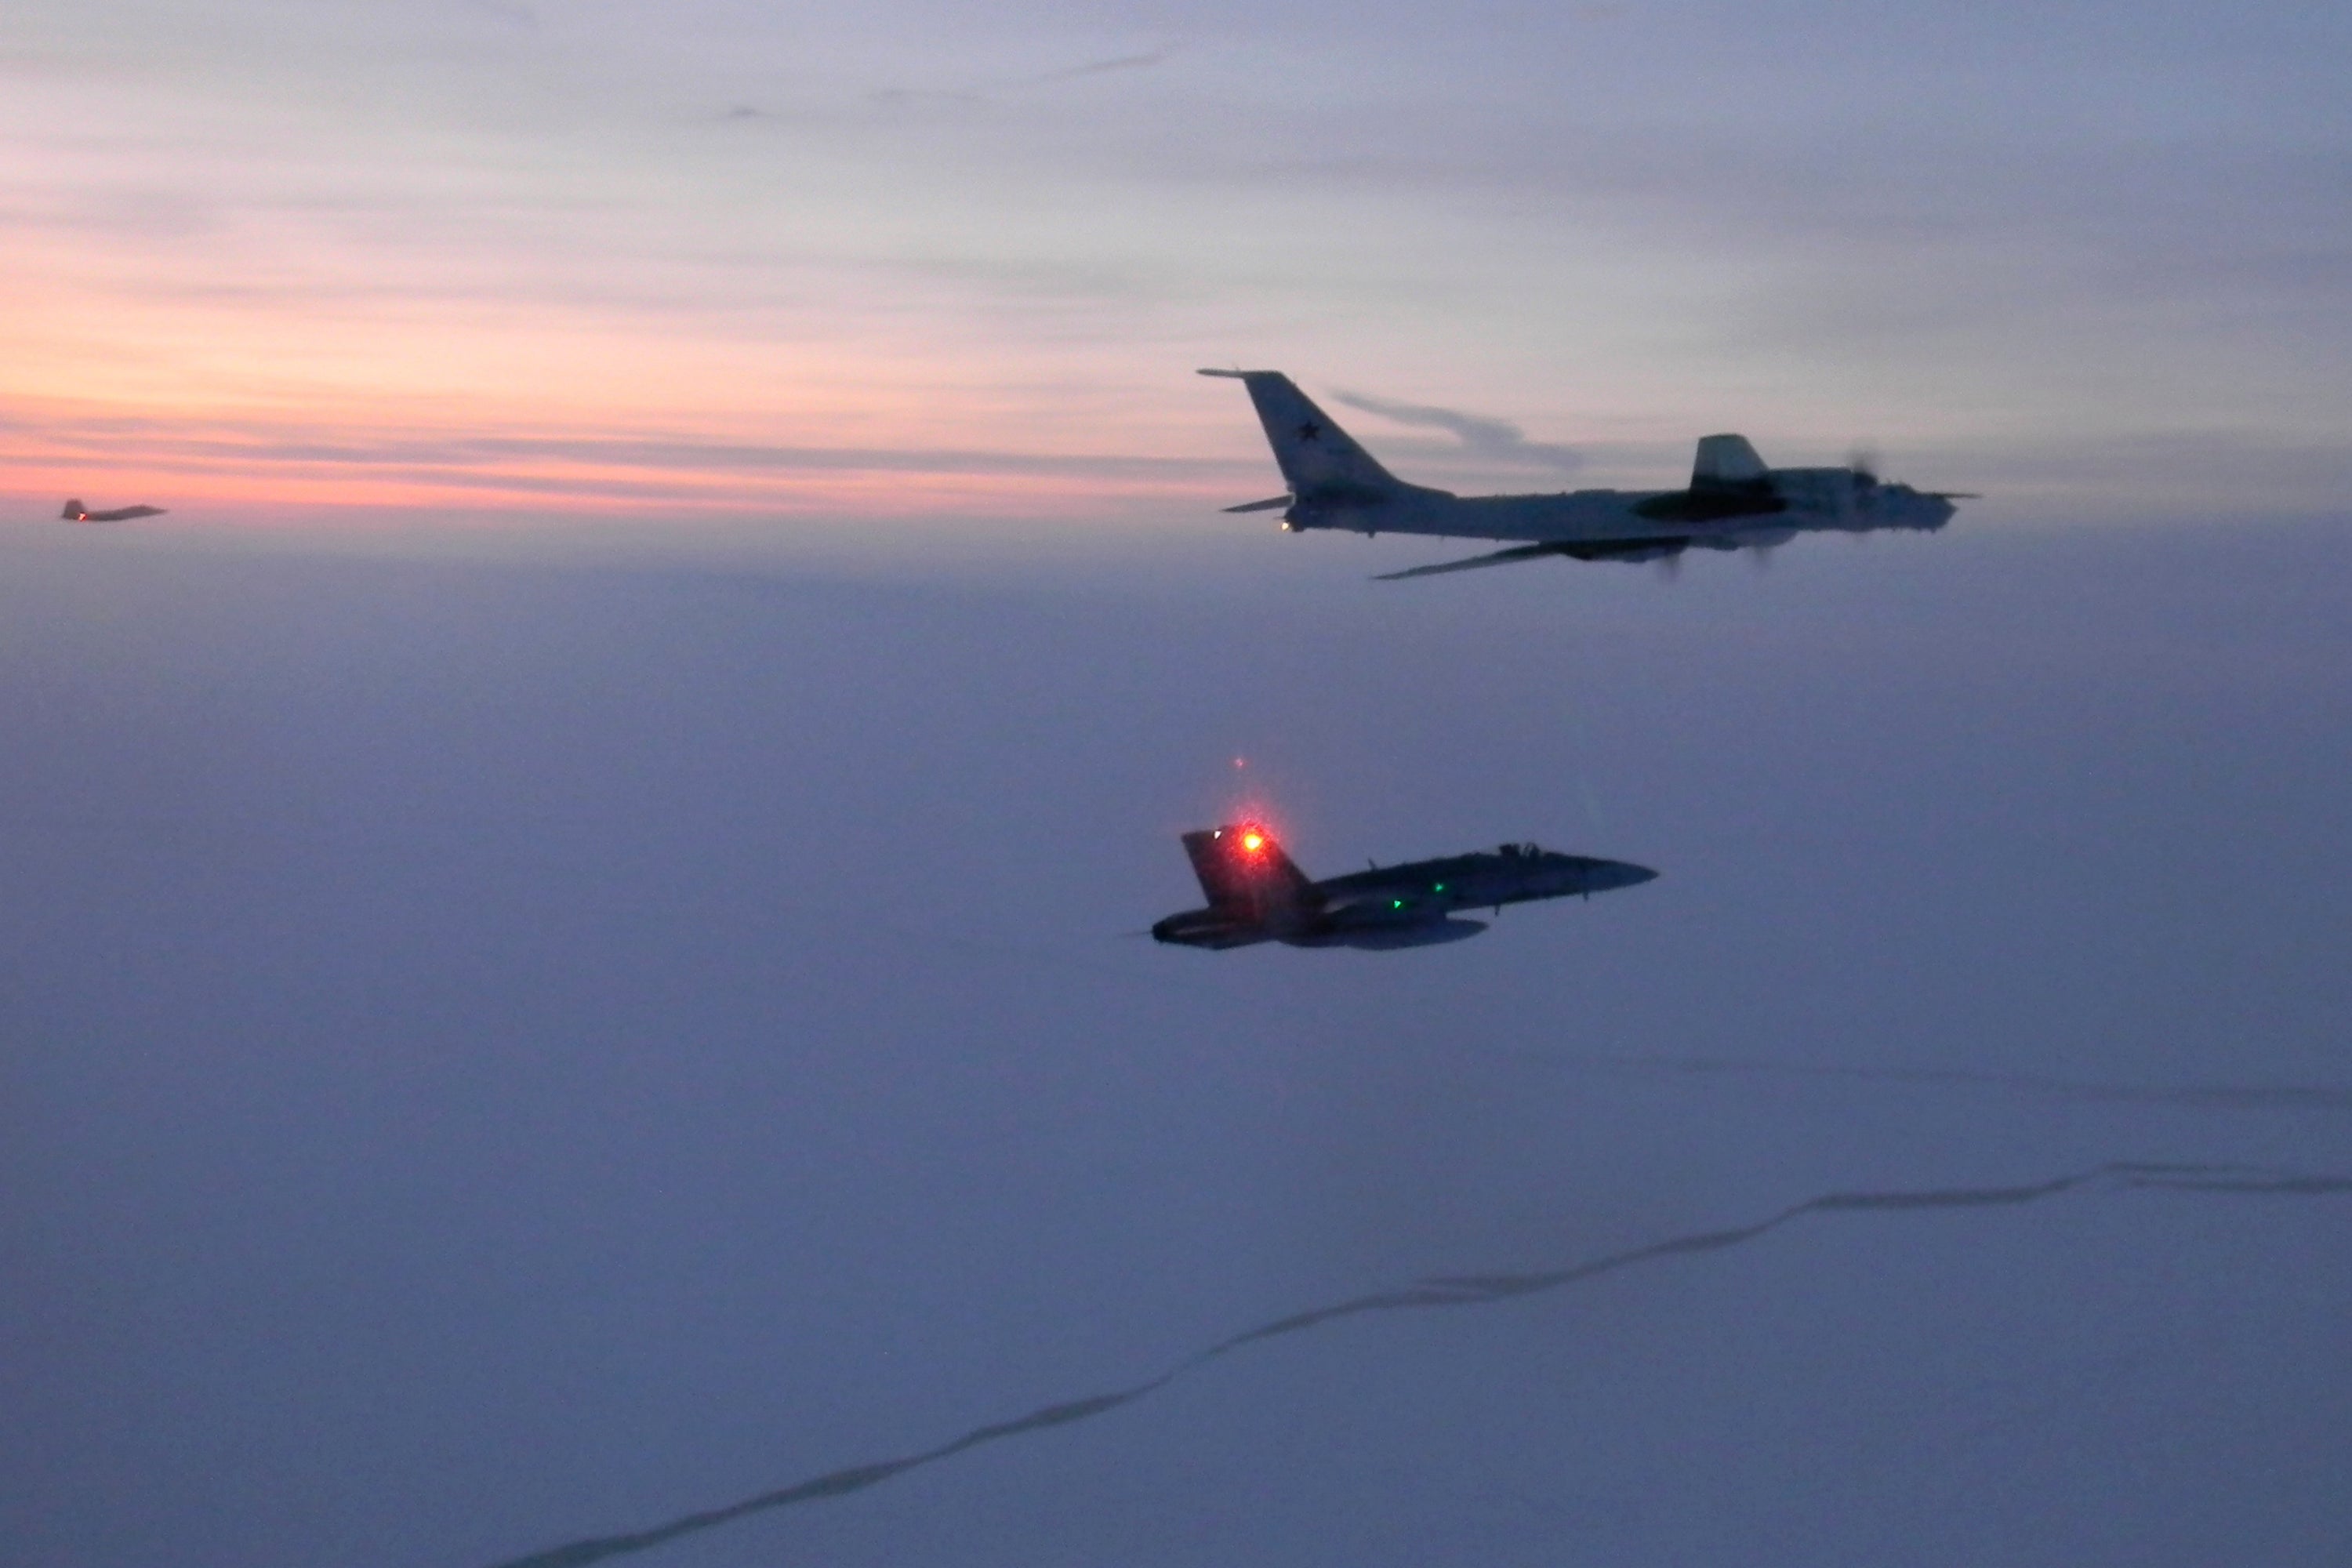 A Russian Tu-142 maritime reconnaissance aircraft, top, being intercepted near the Alaska coastline